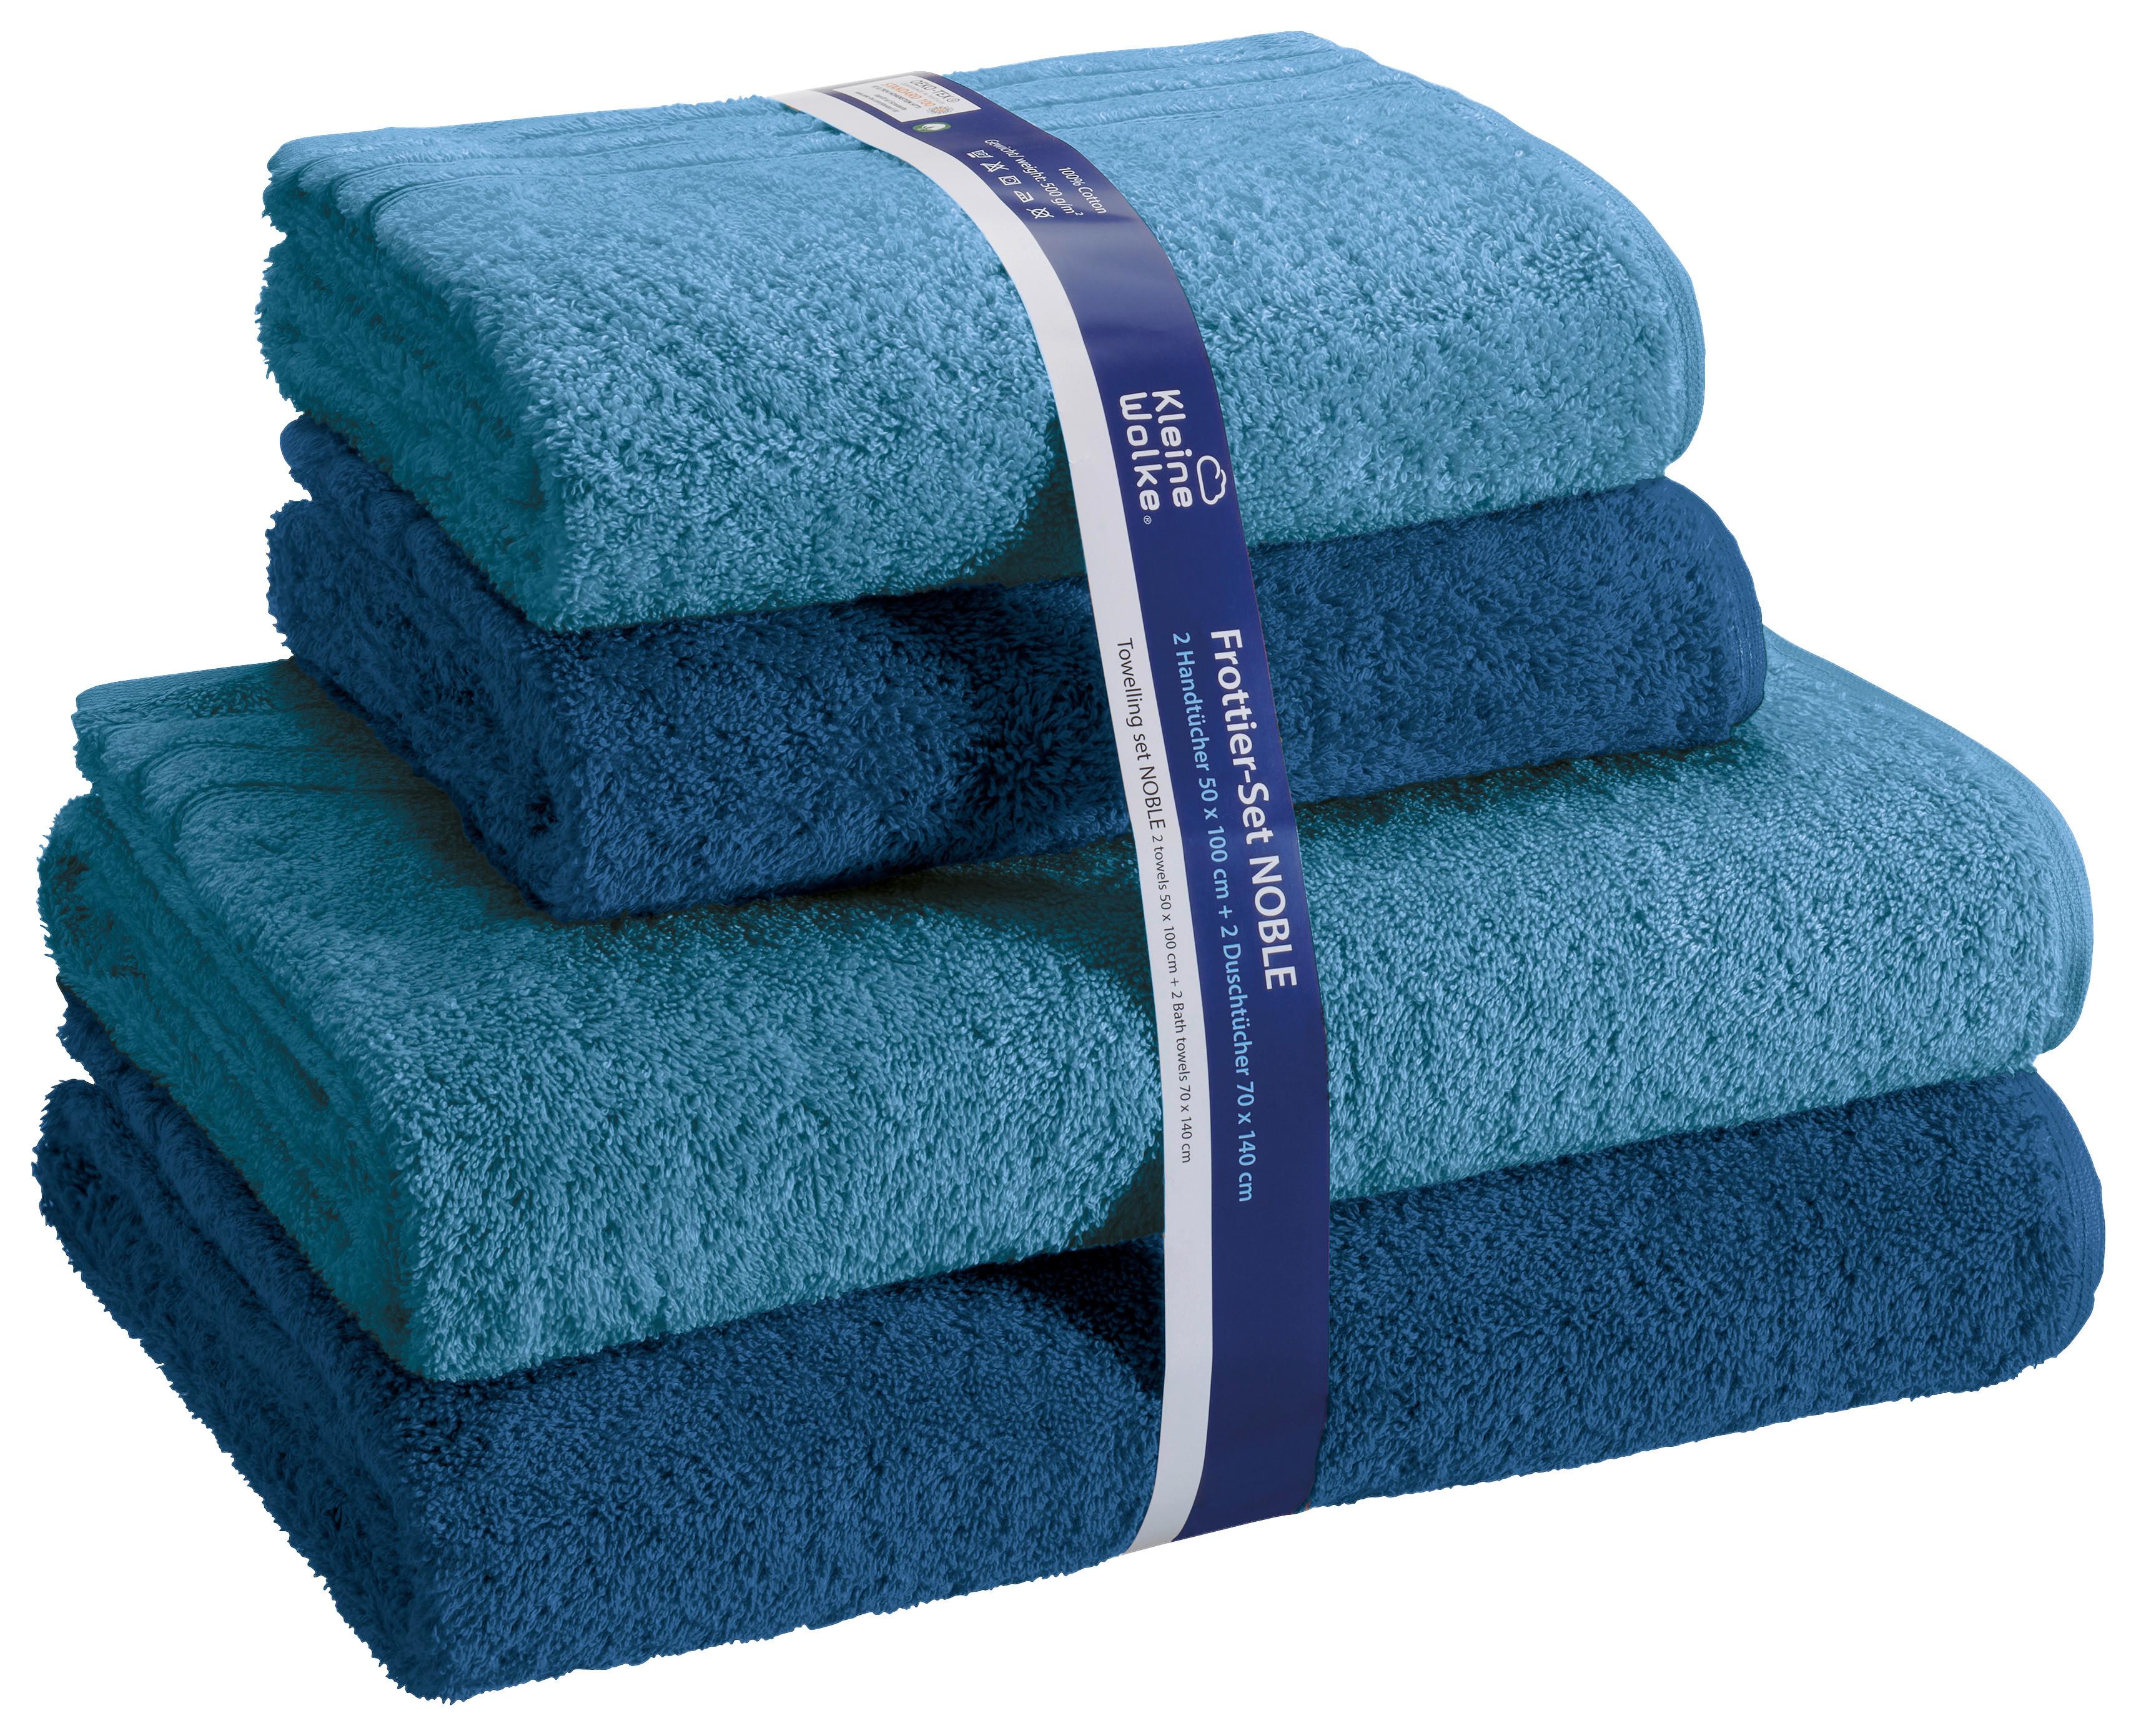 Handtuch Set Noble Baumwolle Blau/Dunkelblau 4-Er Pack